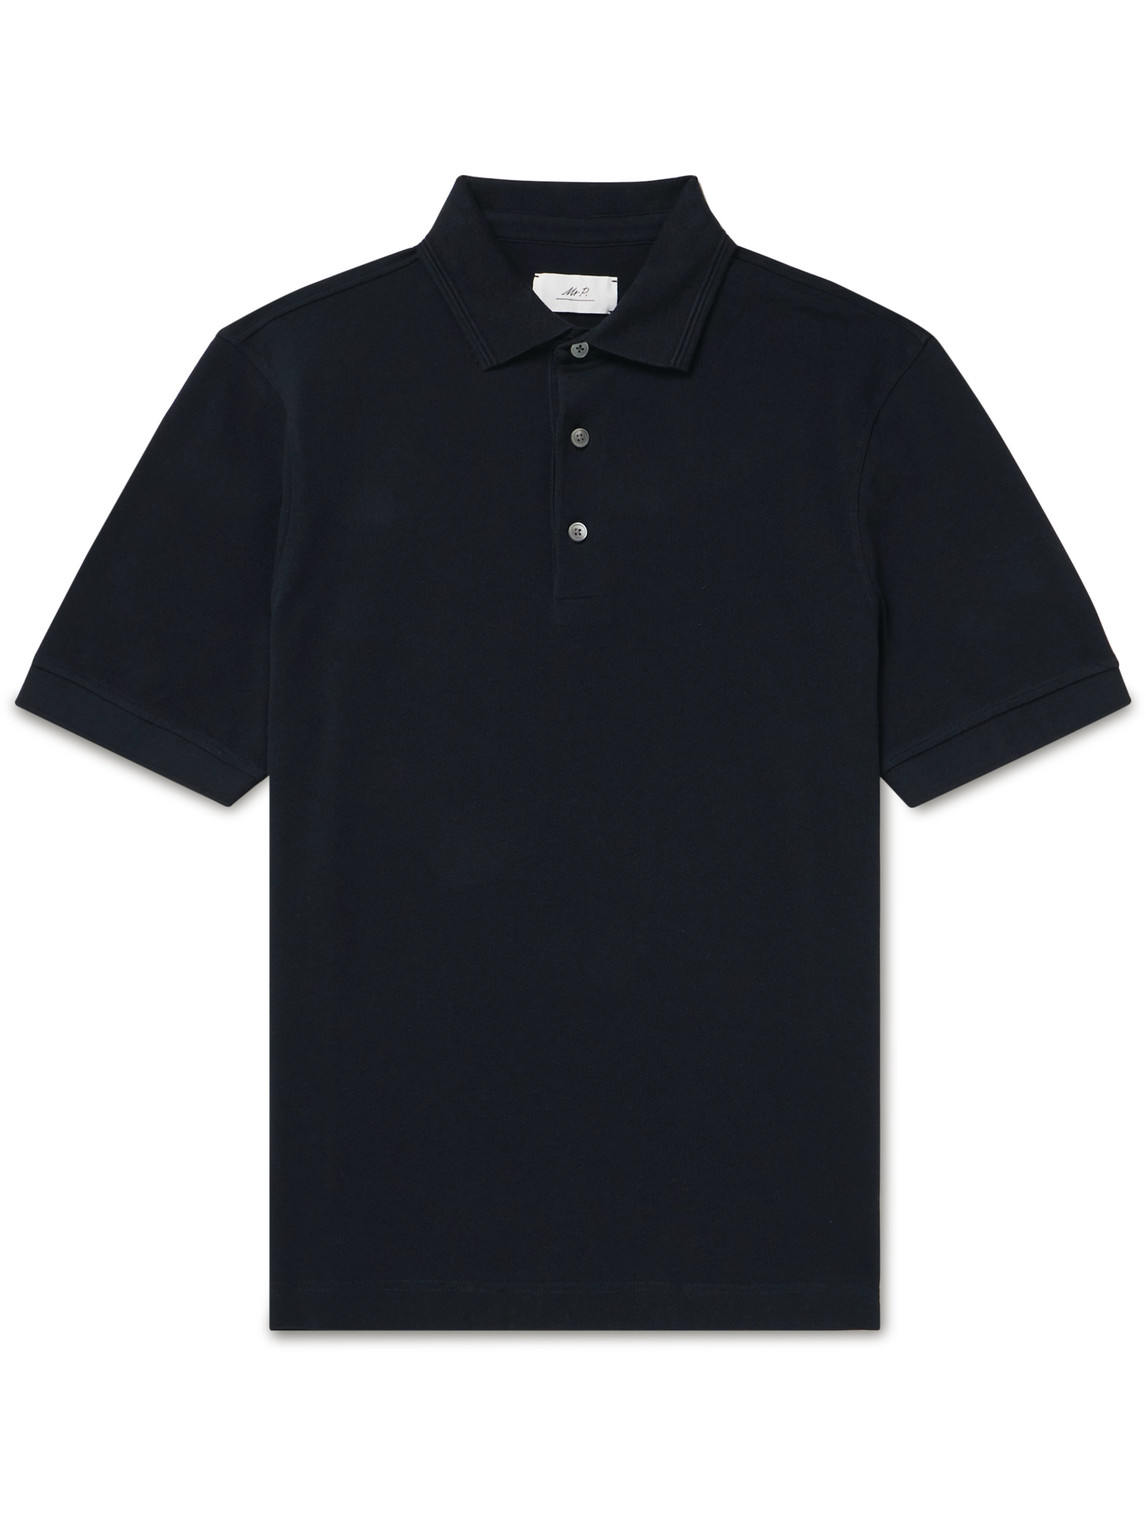 Mr P Cotton-piqué Polo Shirt In Black